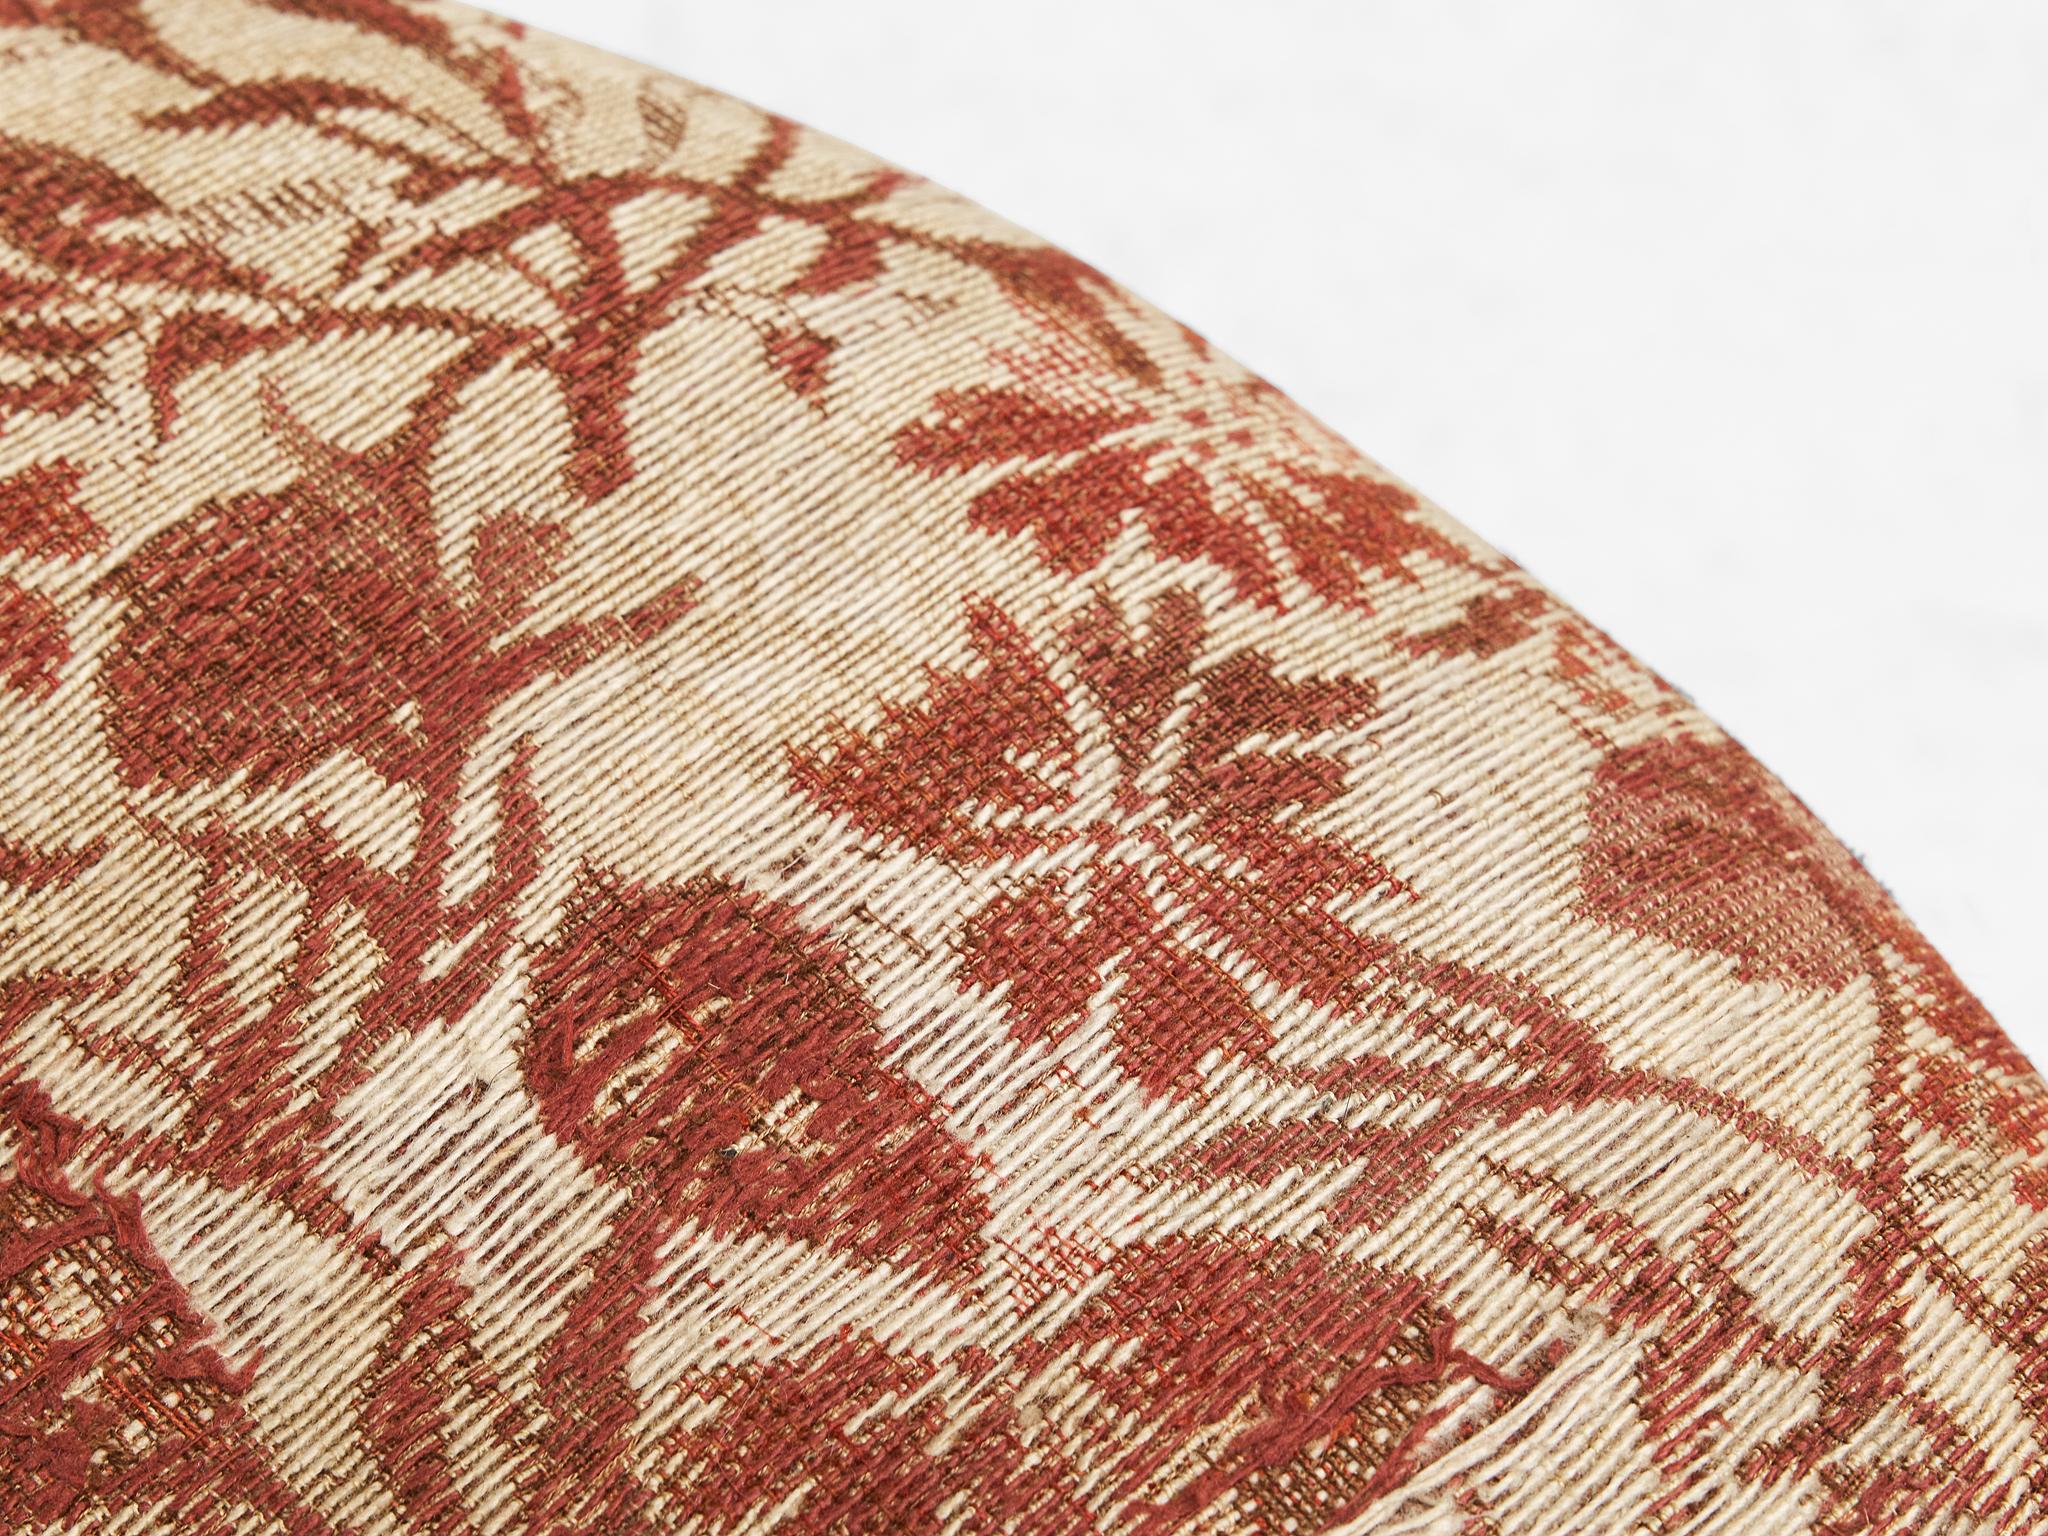 Tissu Tabouret Jindrich Halabala en tissu d'ameublement décoratif  en vente